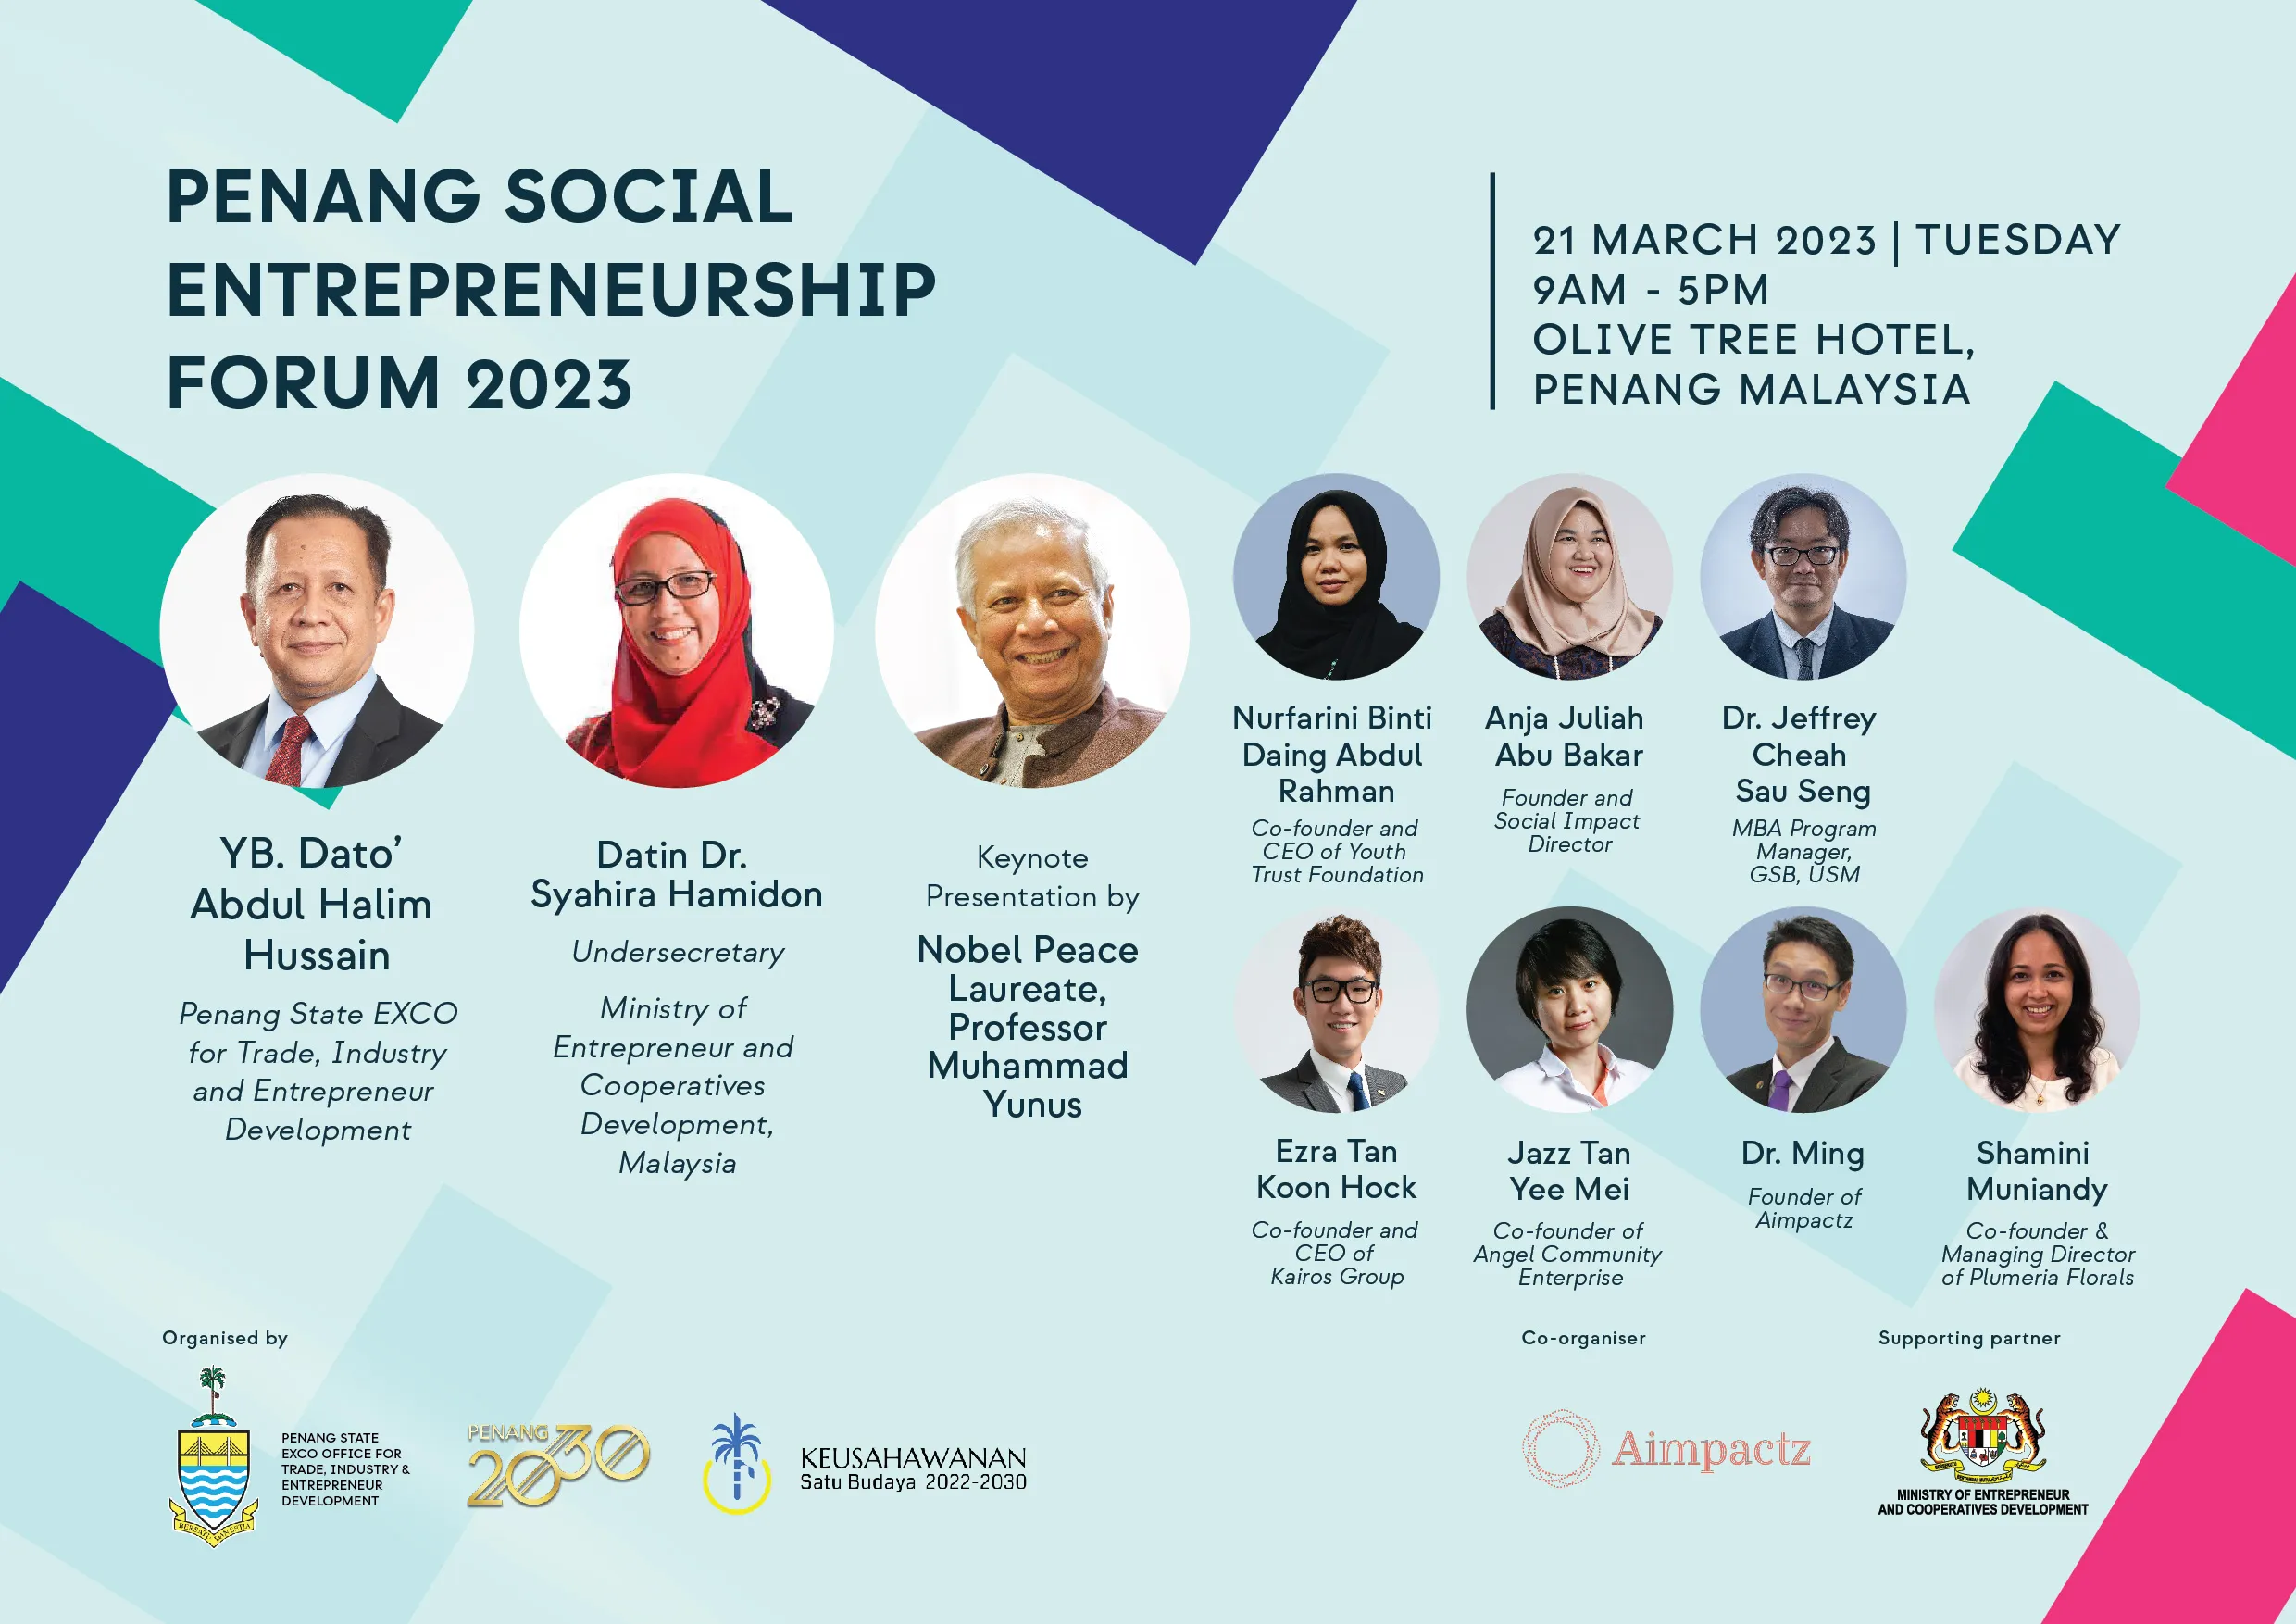 Penang Social Entrepreneurship Forum 2023 (PSEF '23)